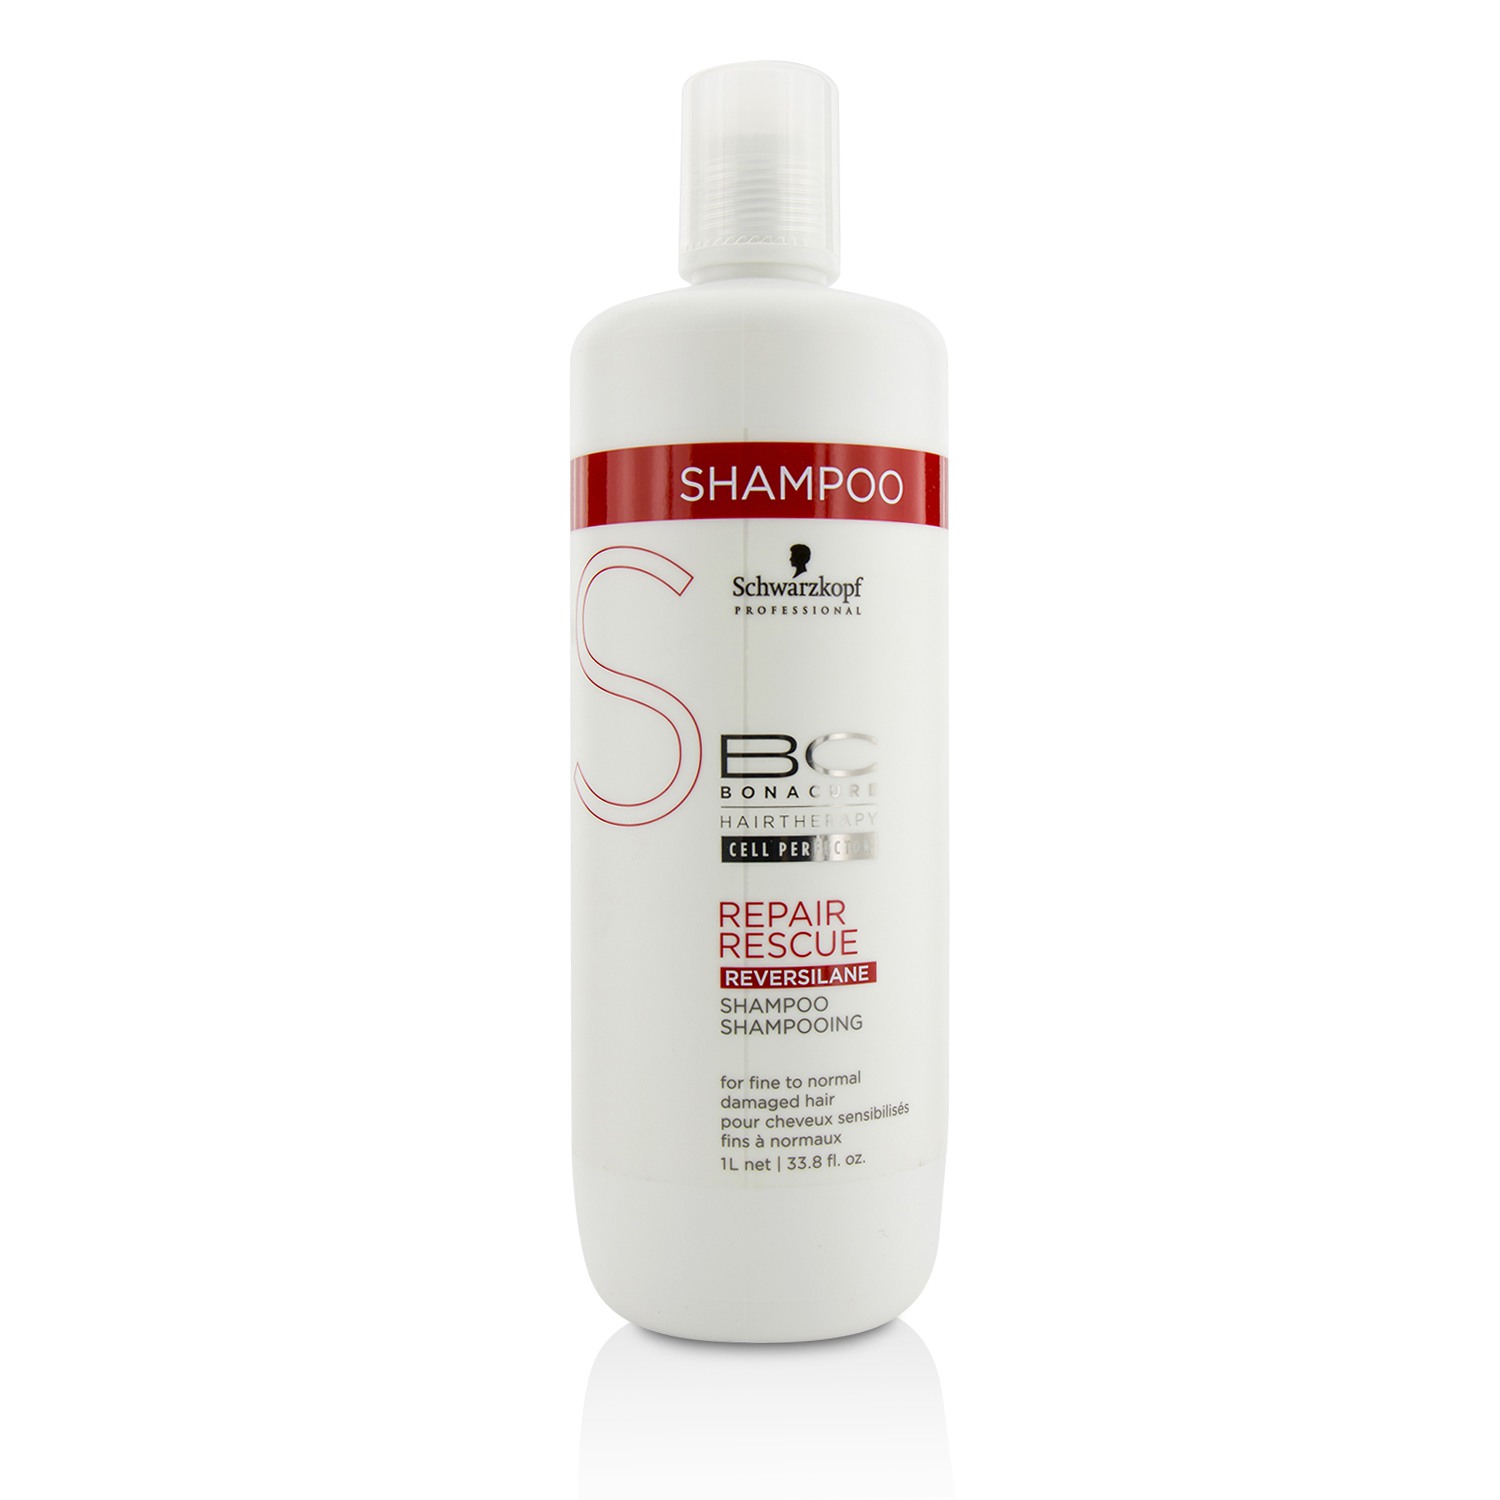 BC Repair Rescue Reversilane Shampoo (For Fine to Normal Damaged Hair) Schwarzkopf Image